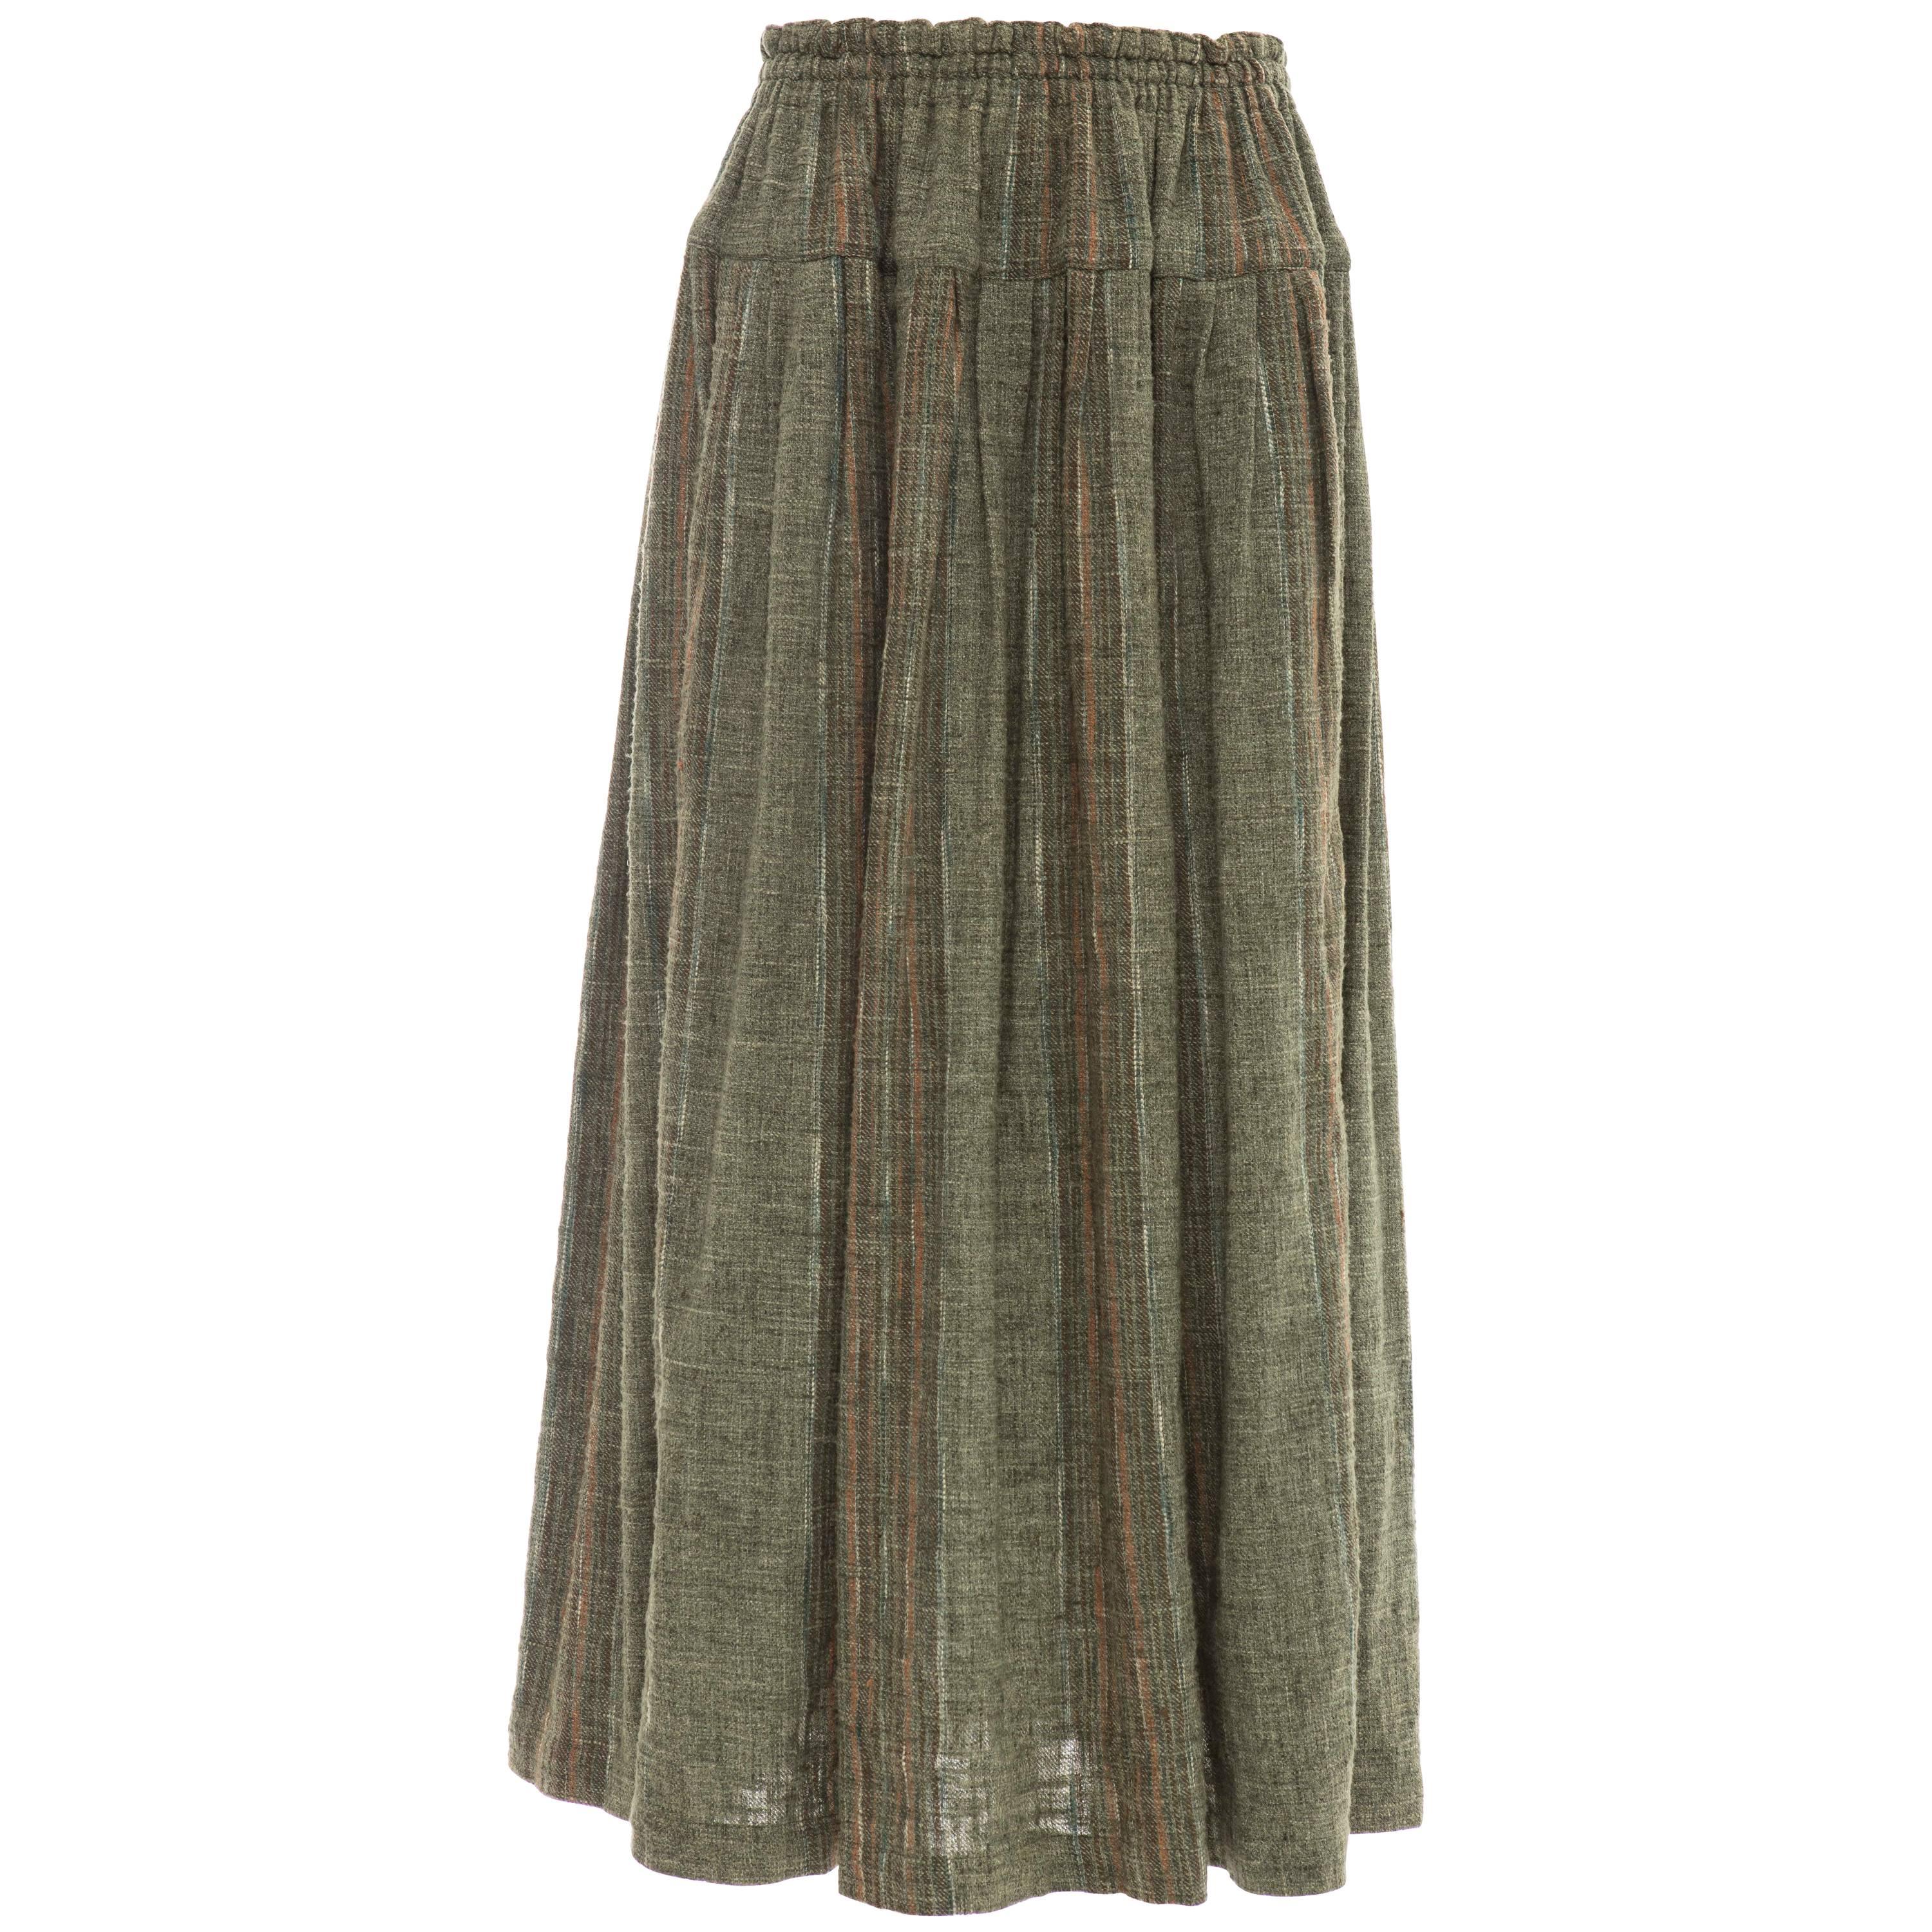 Issey Miyake Plantation Olive Green Woven Cotton Skirt, Circa 1980's